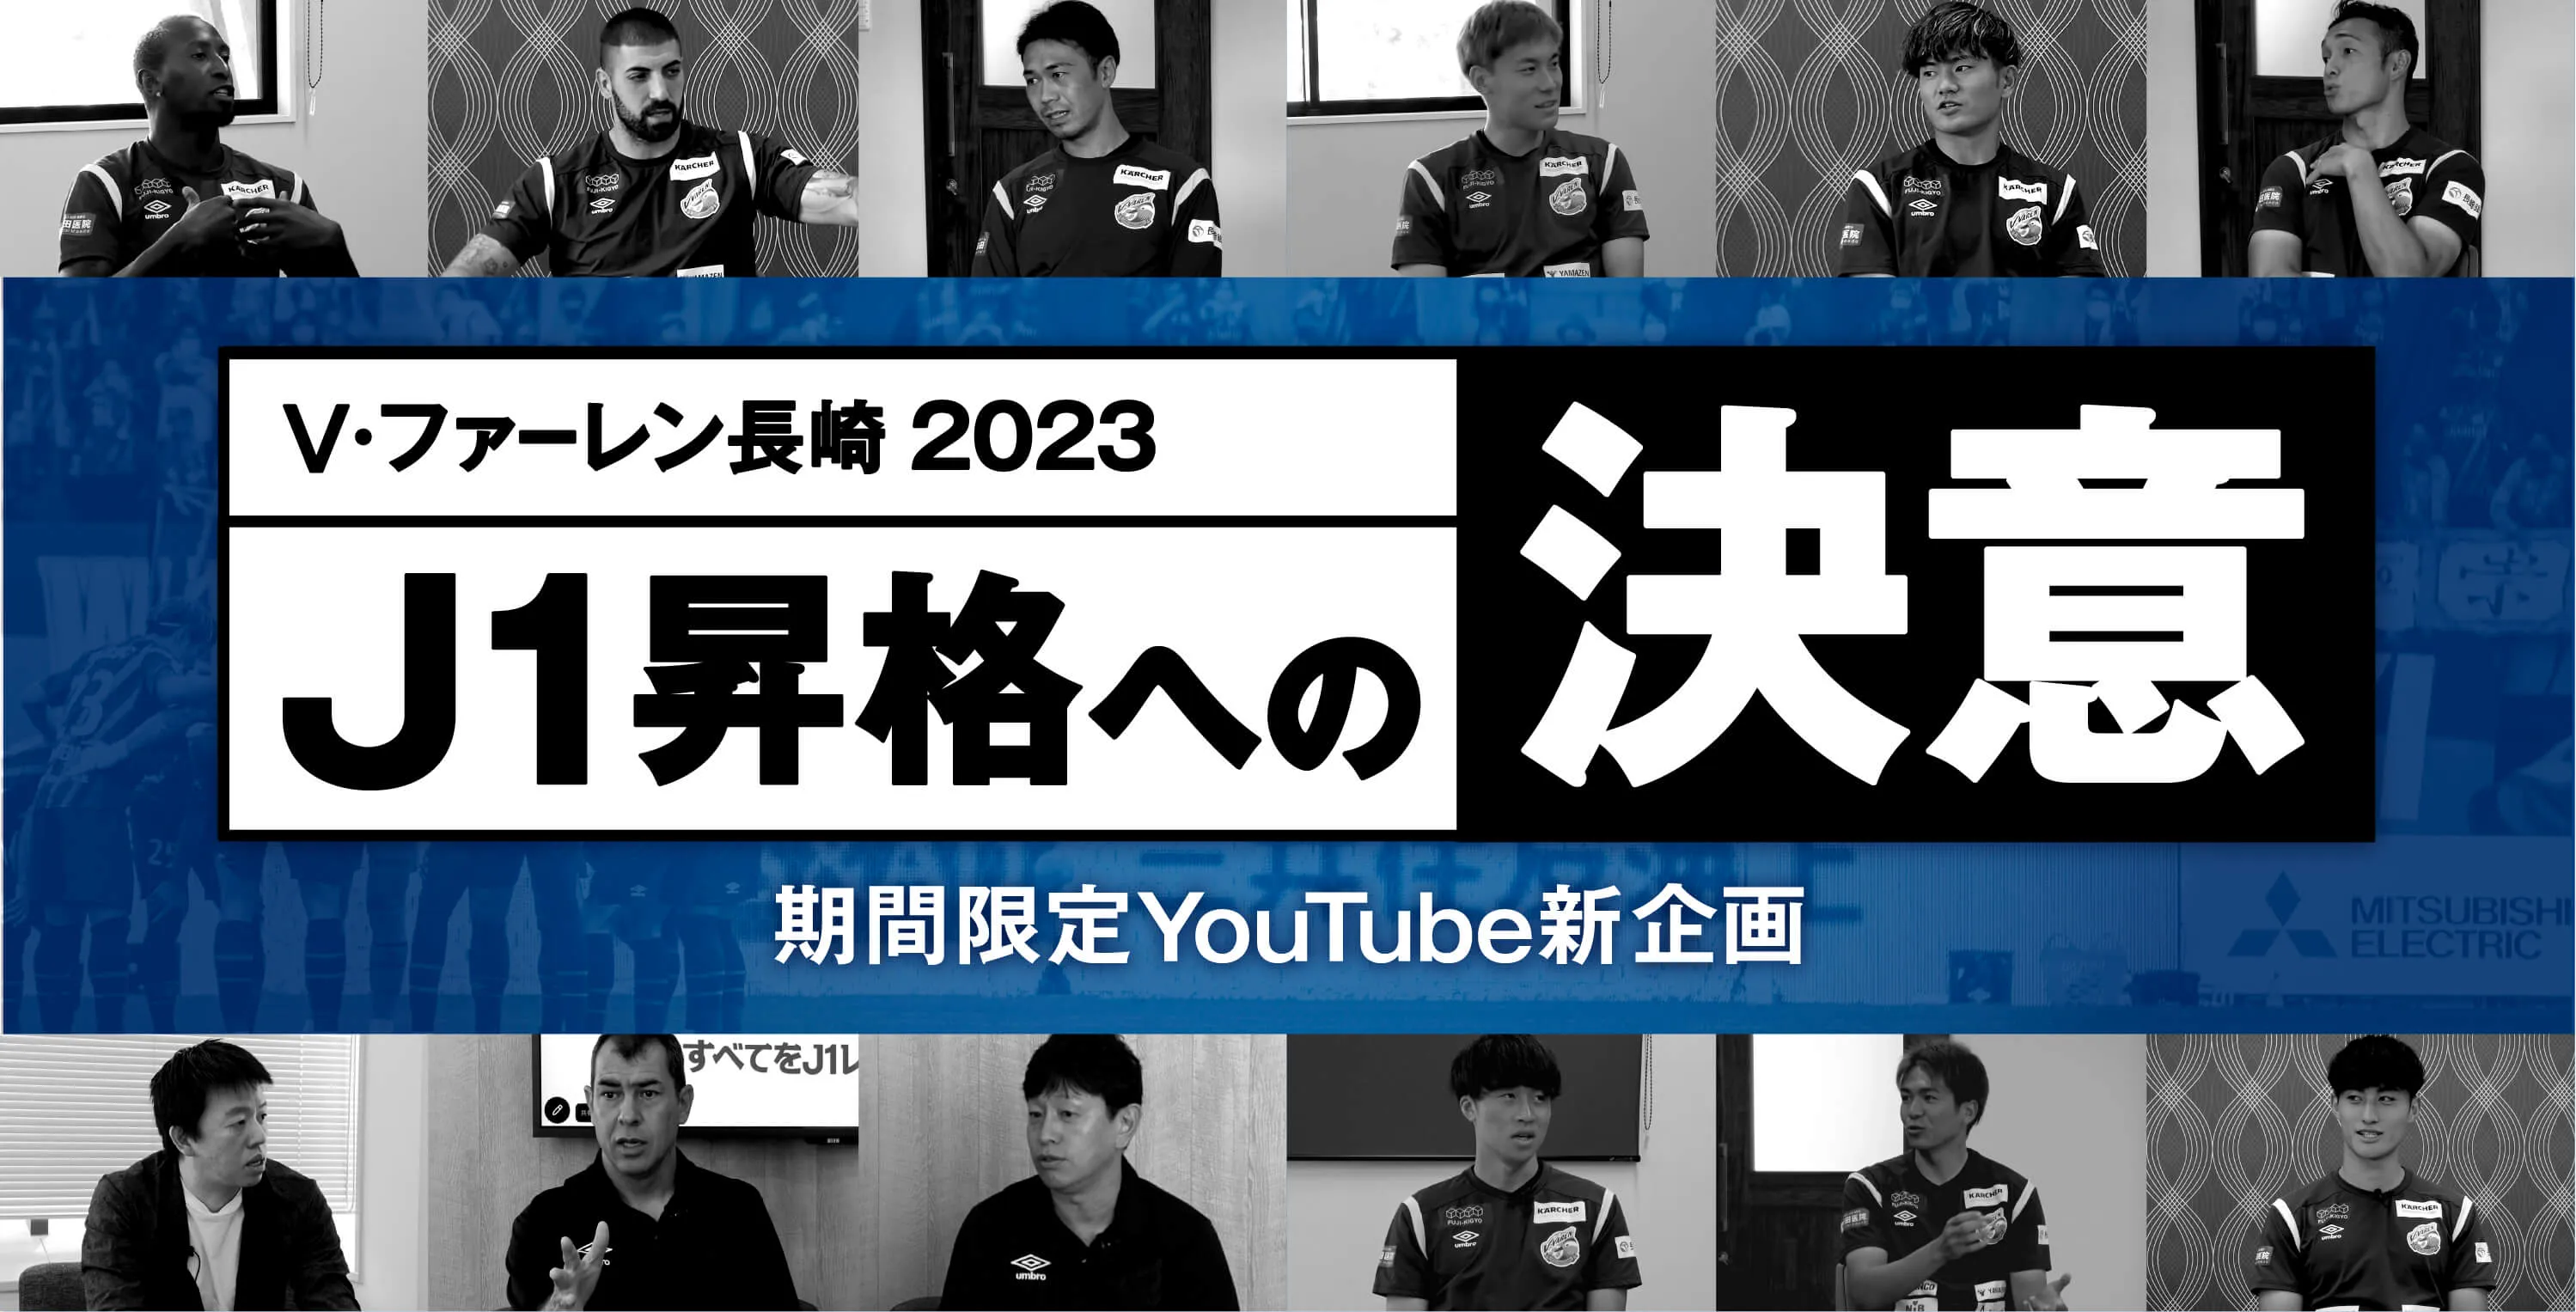 V・ファーレン長崎 2023 J1昇格への決意 期間限定YouTube新企画